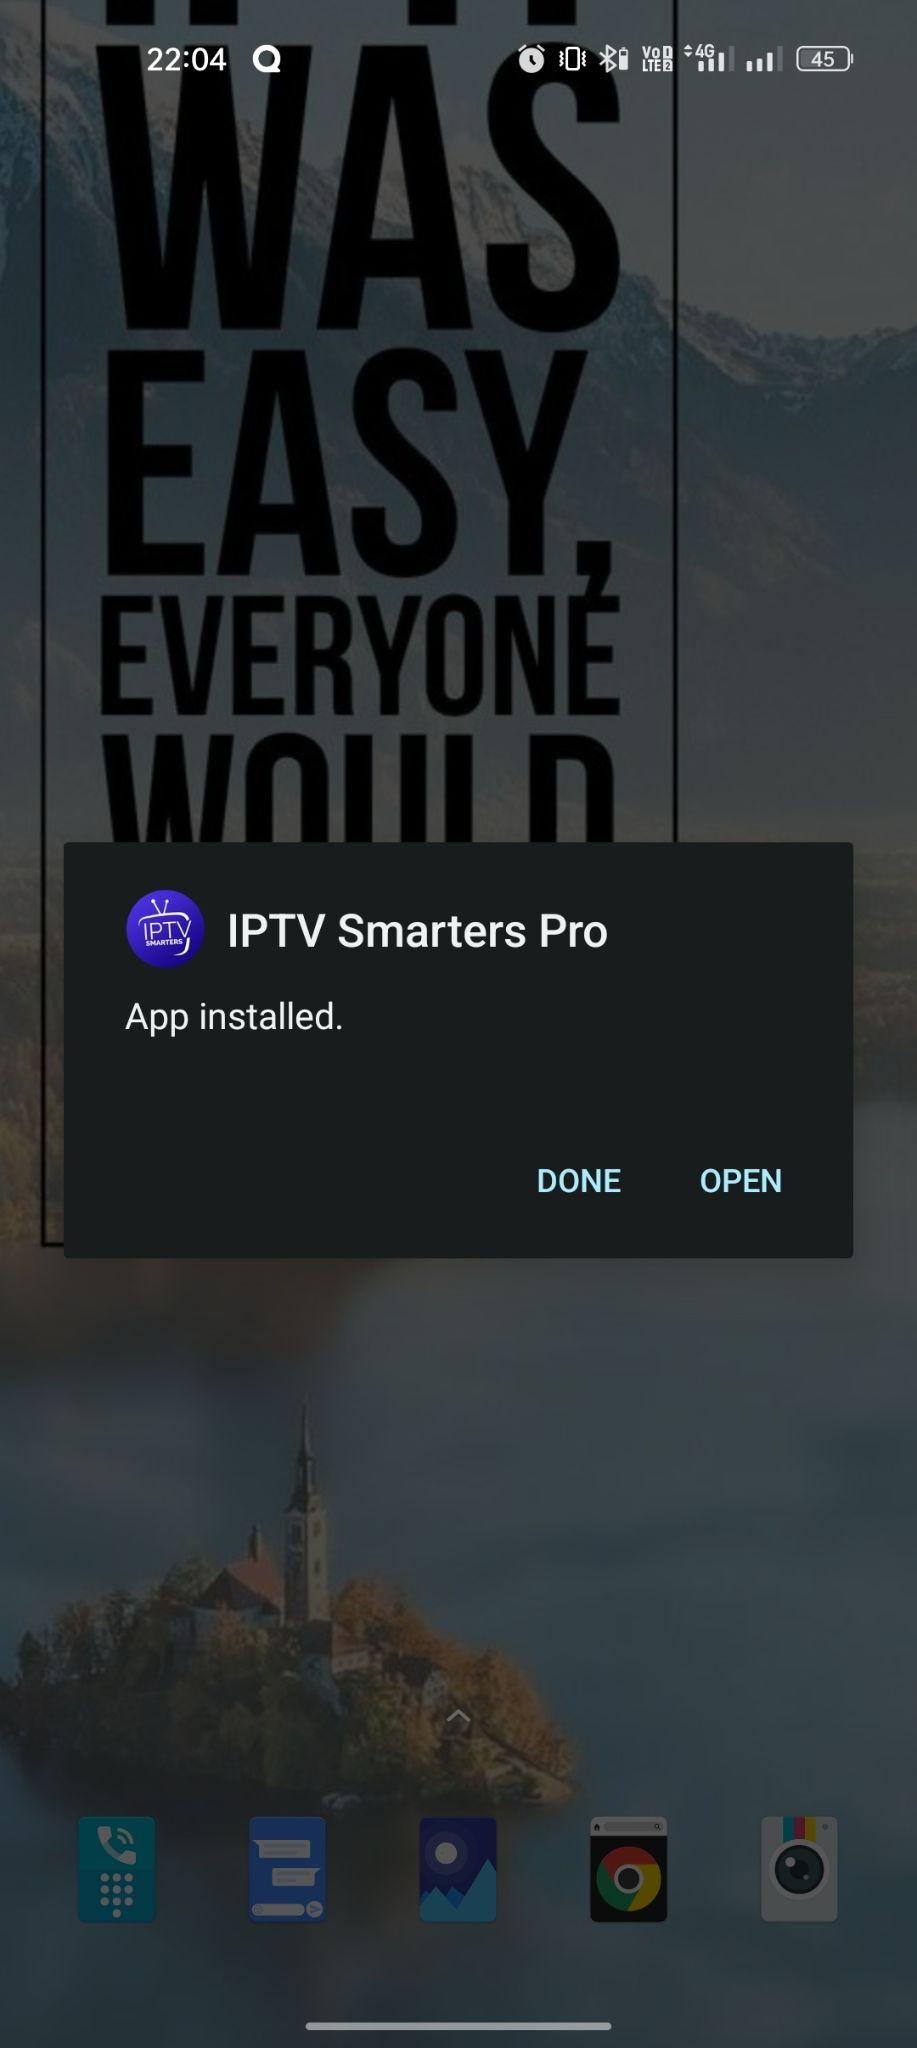 IPTV Smarters Pro apk installed